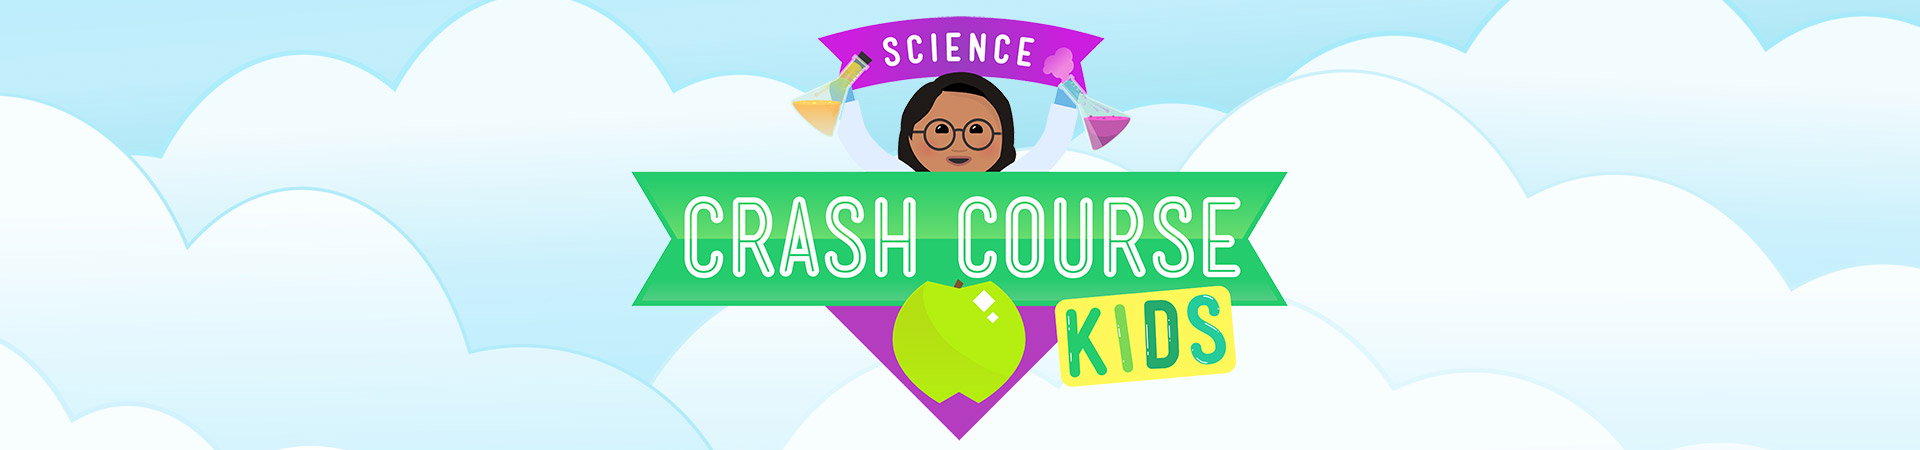 Crash Course Kids Space Science